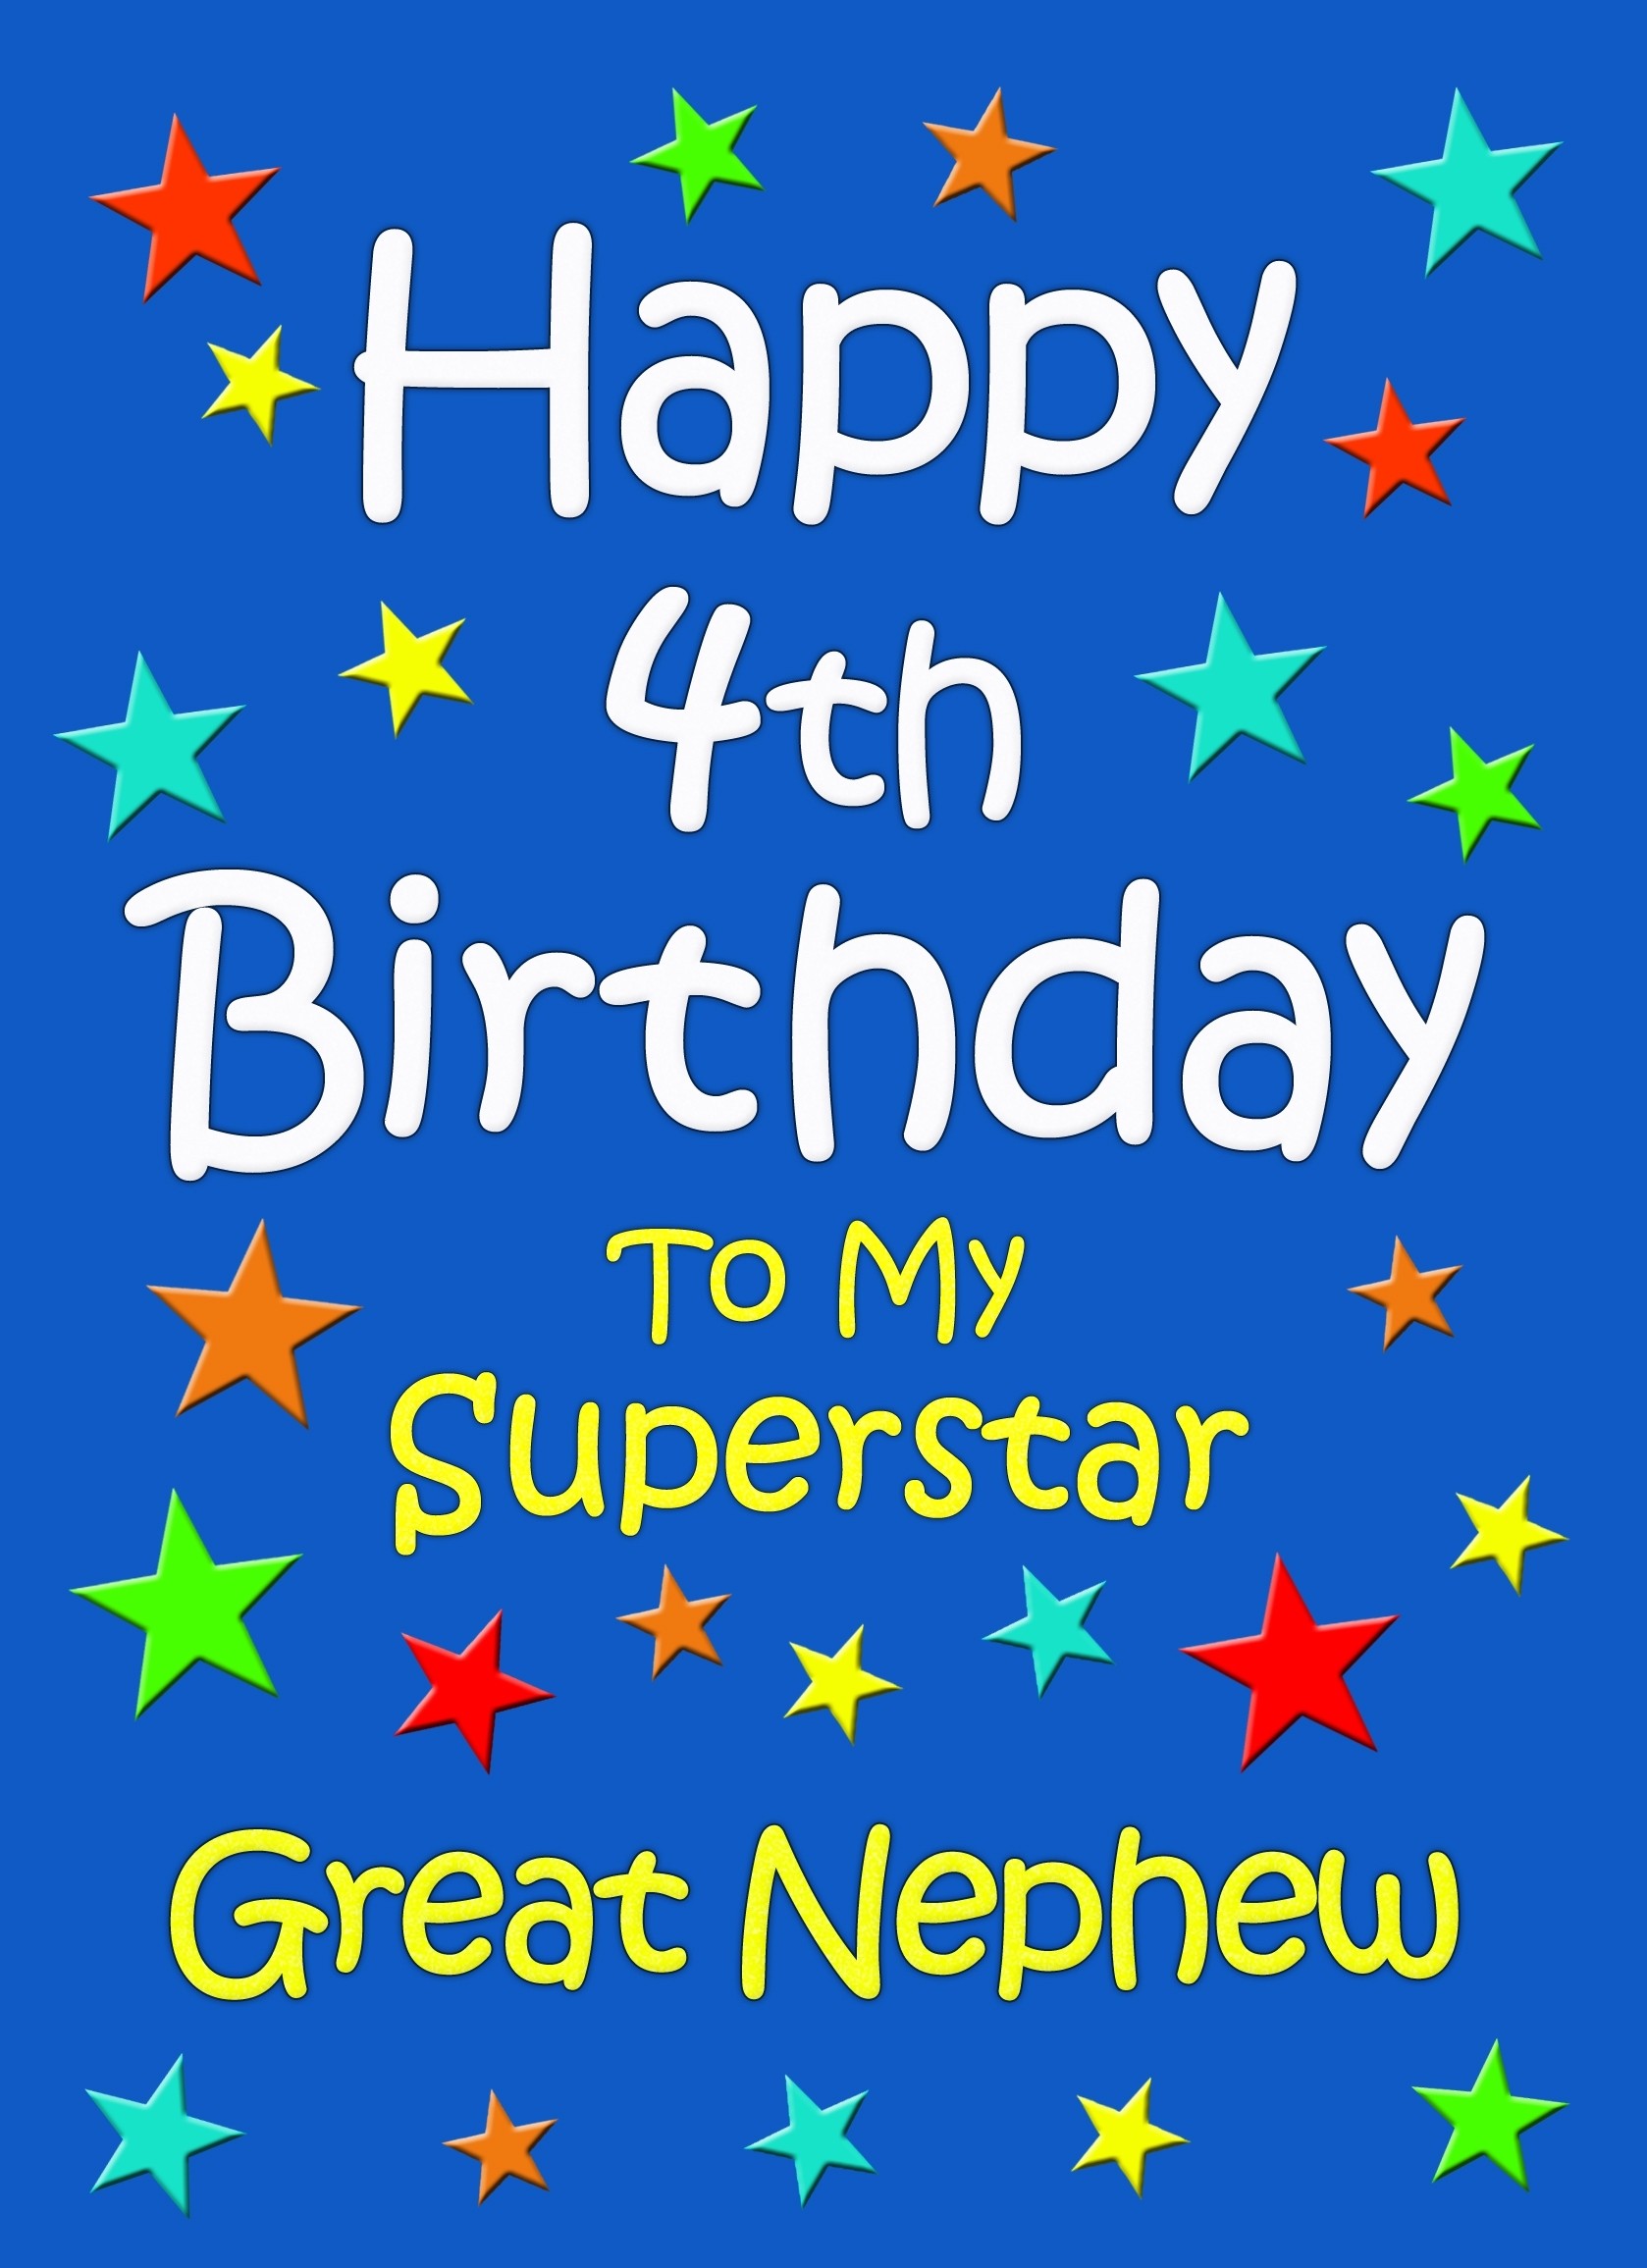 Great Nephew 4th Birthday Card (Blue)